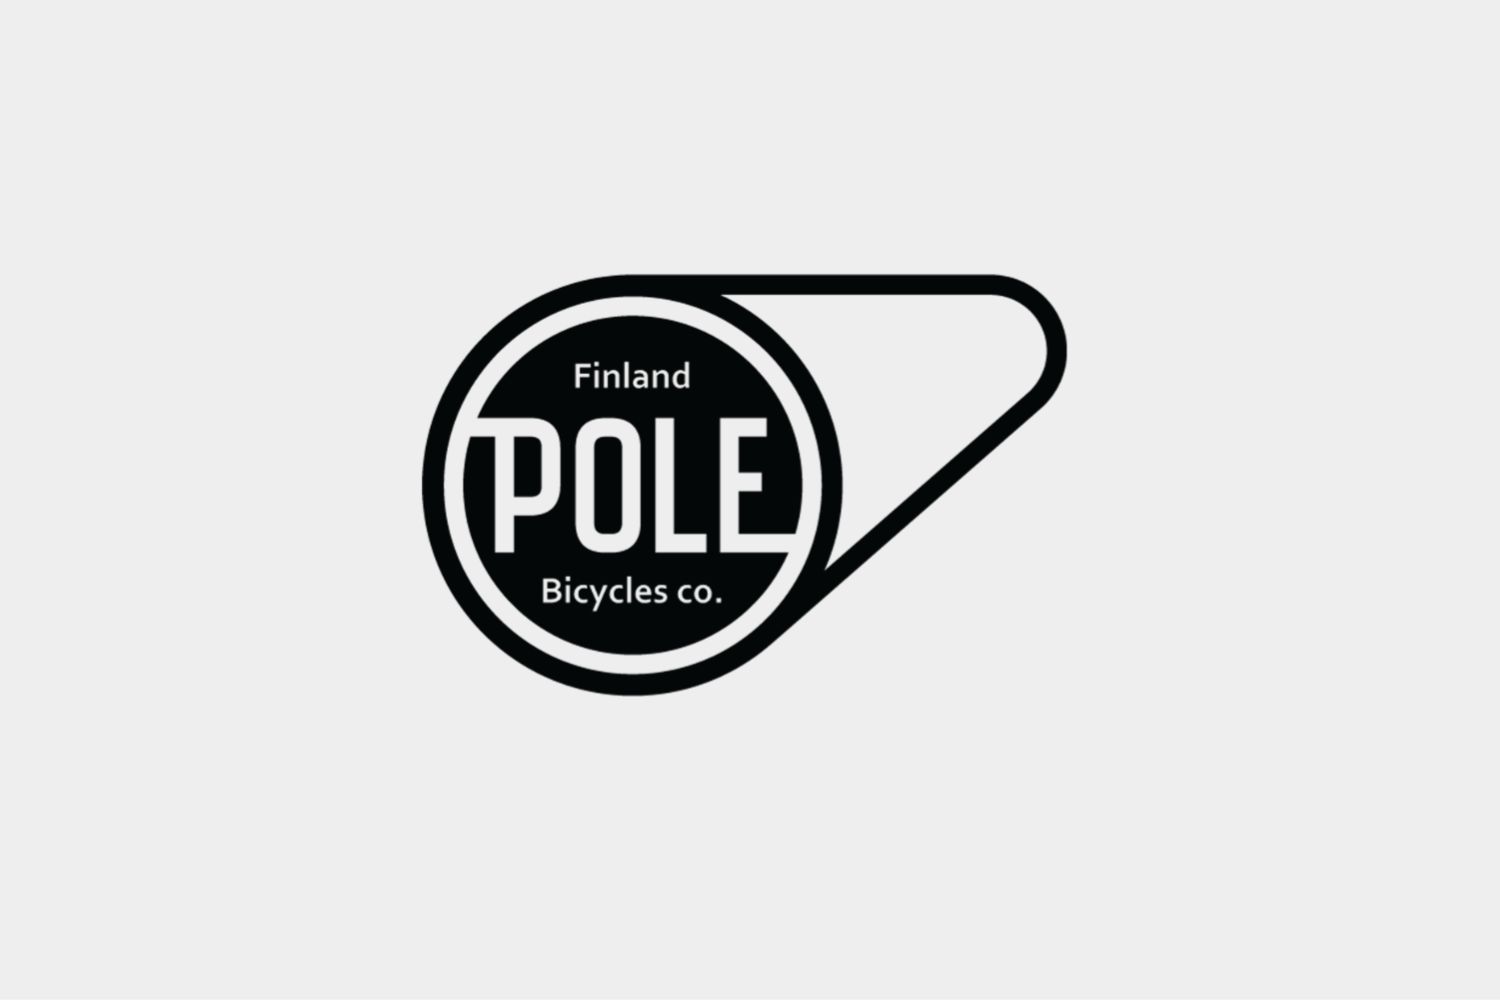 Pole Bicycle Company Oy